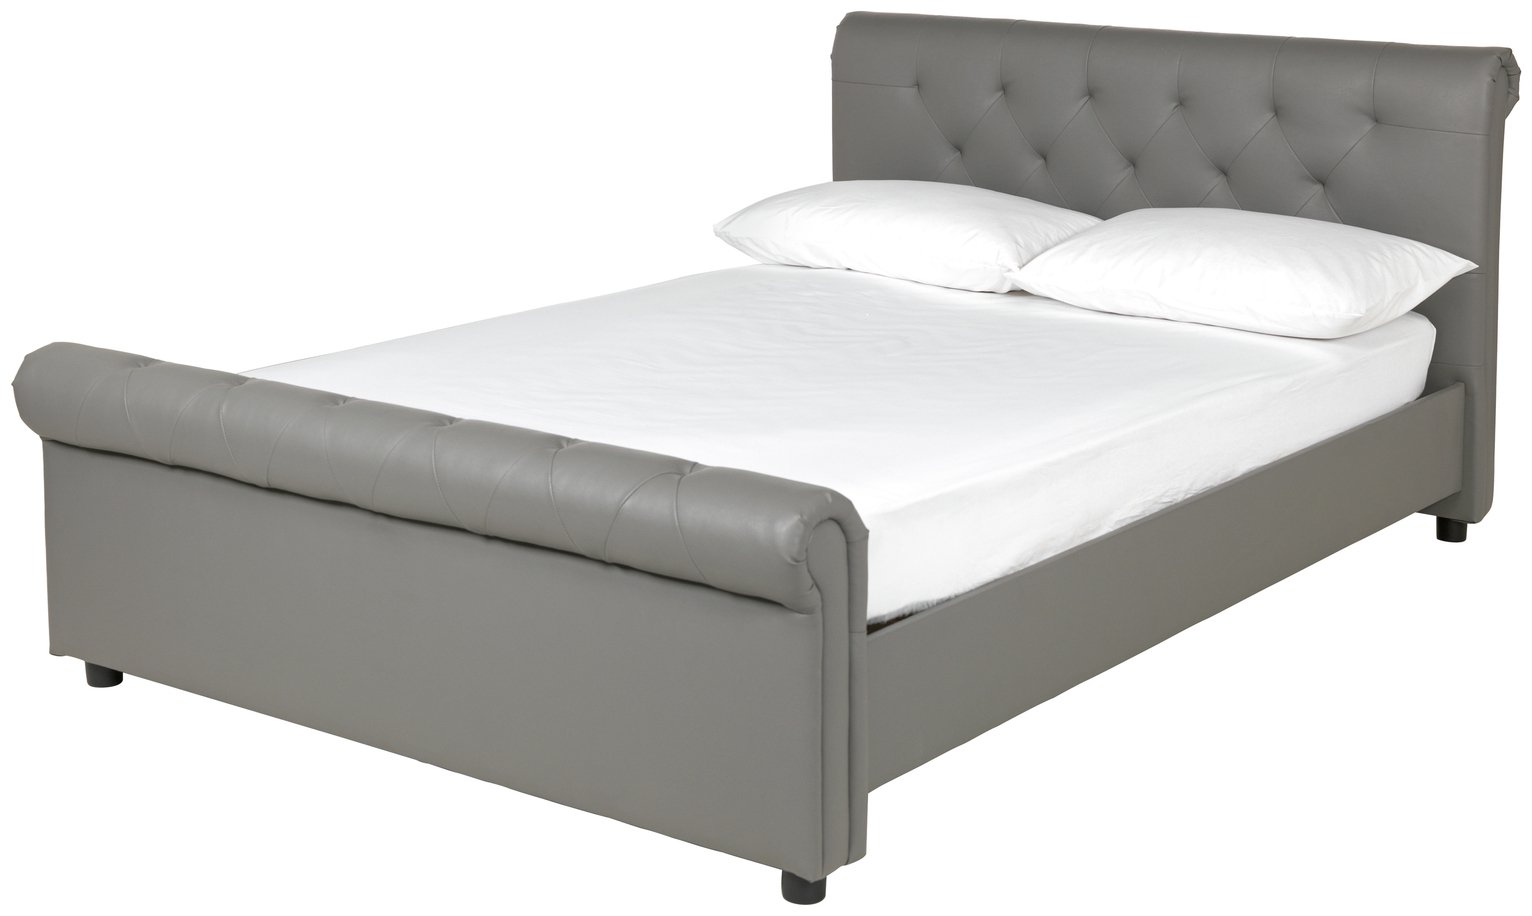 Argos Home Hayford Kingsize Bed Frame - Grey